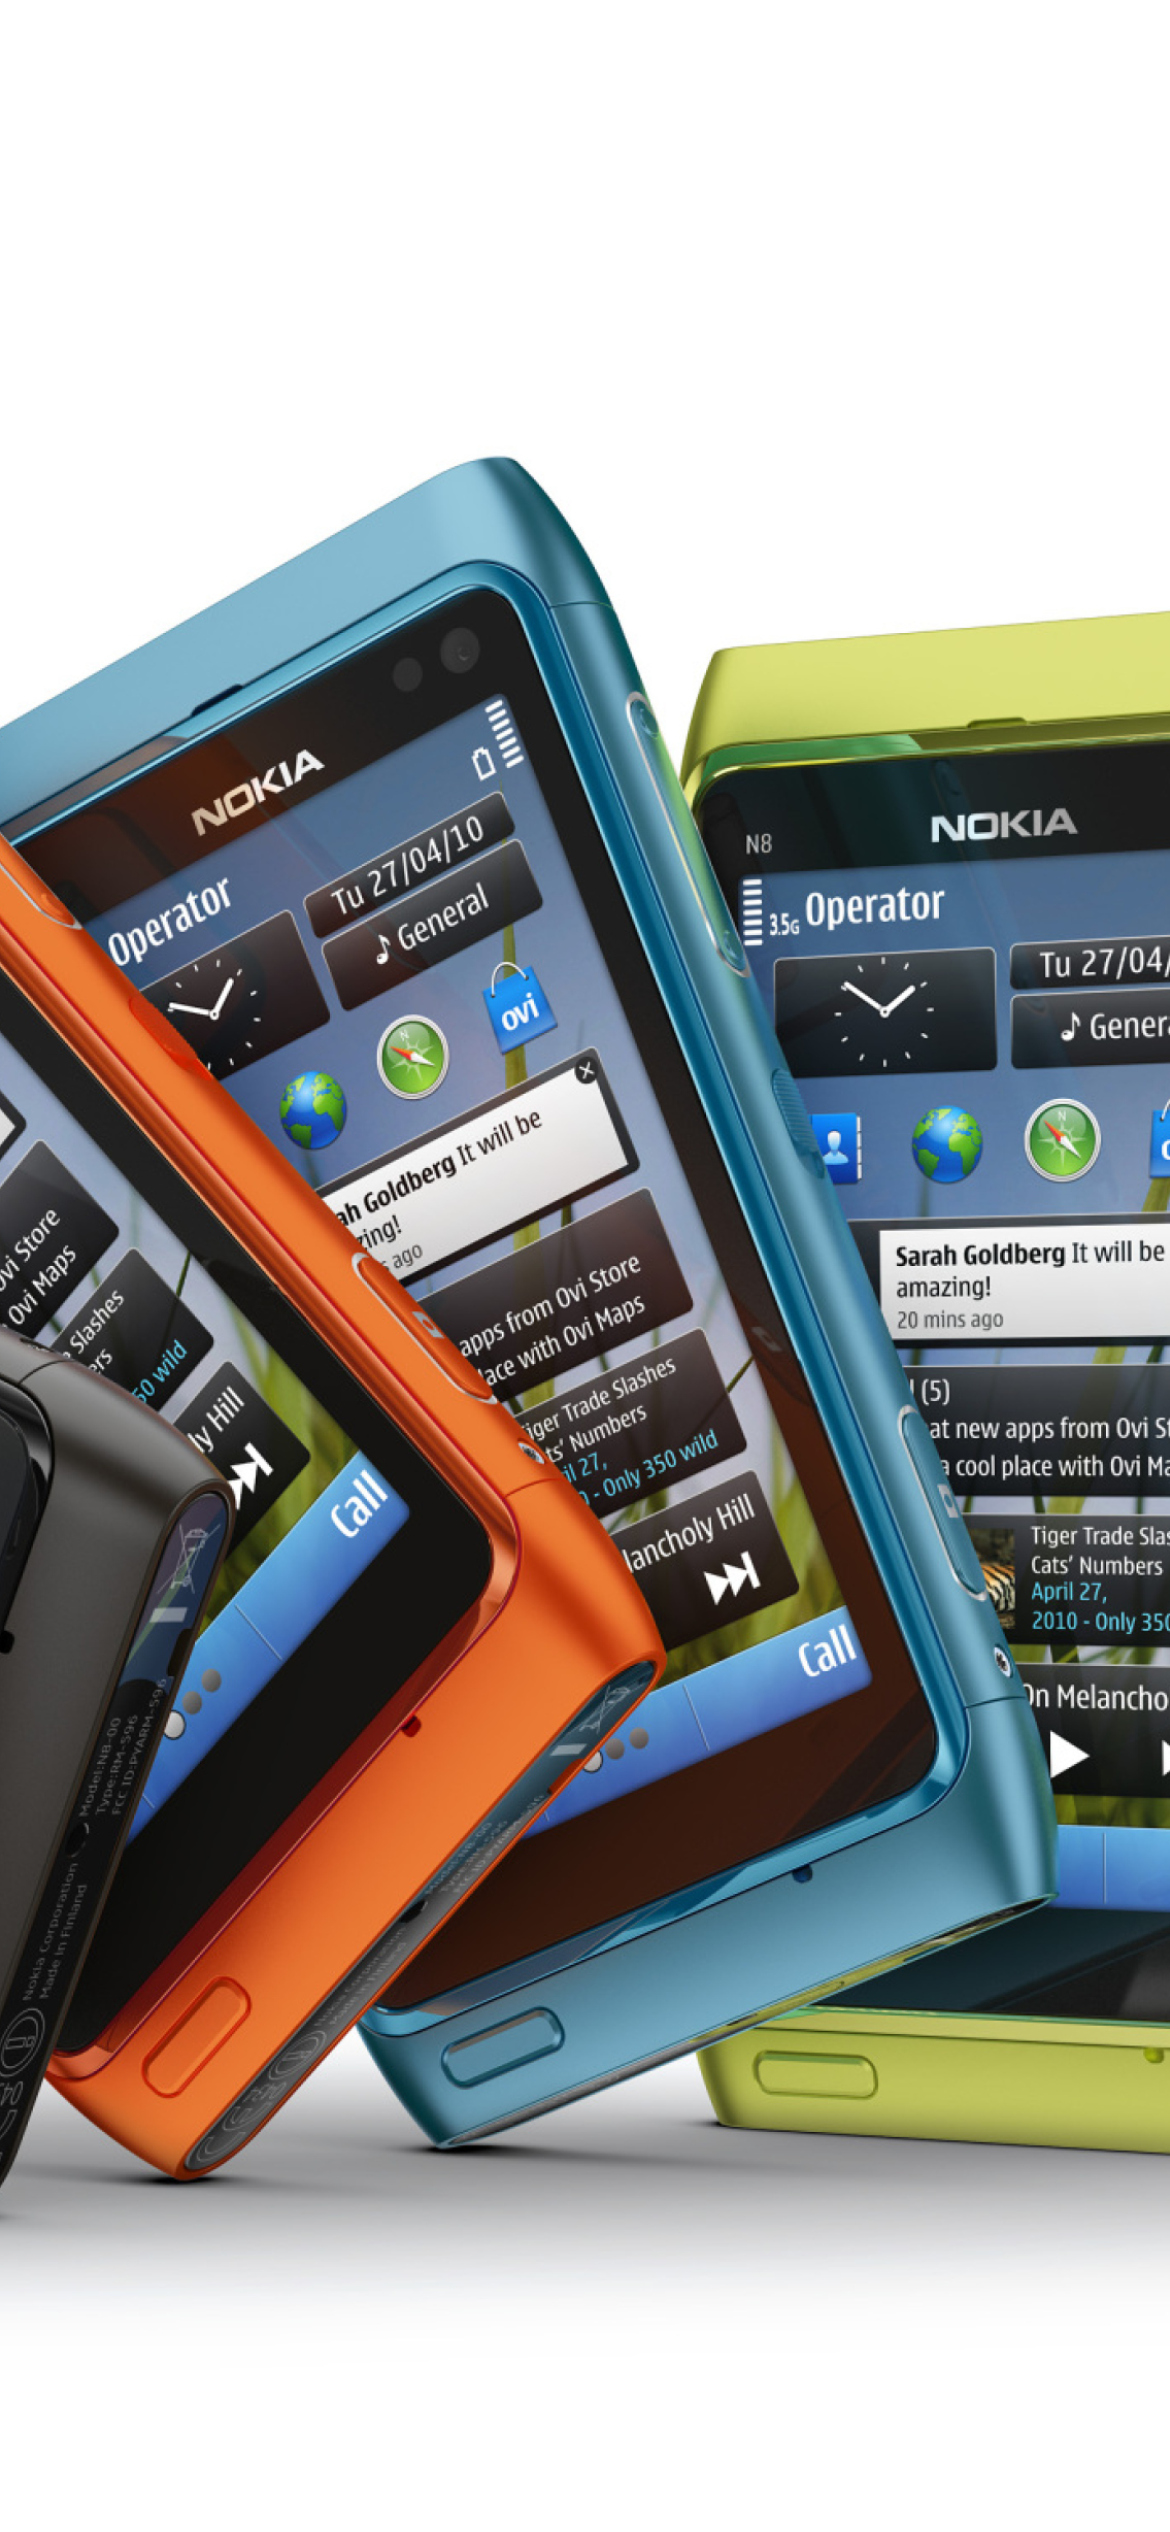 Wallpaper Light Nokia 5800 Xpressmusic Smartphone Azure Blue  Background  Download Free Image